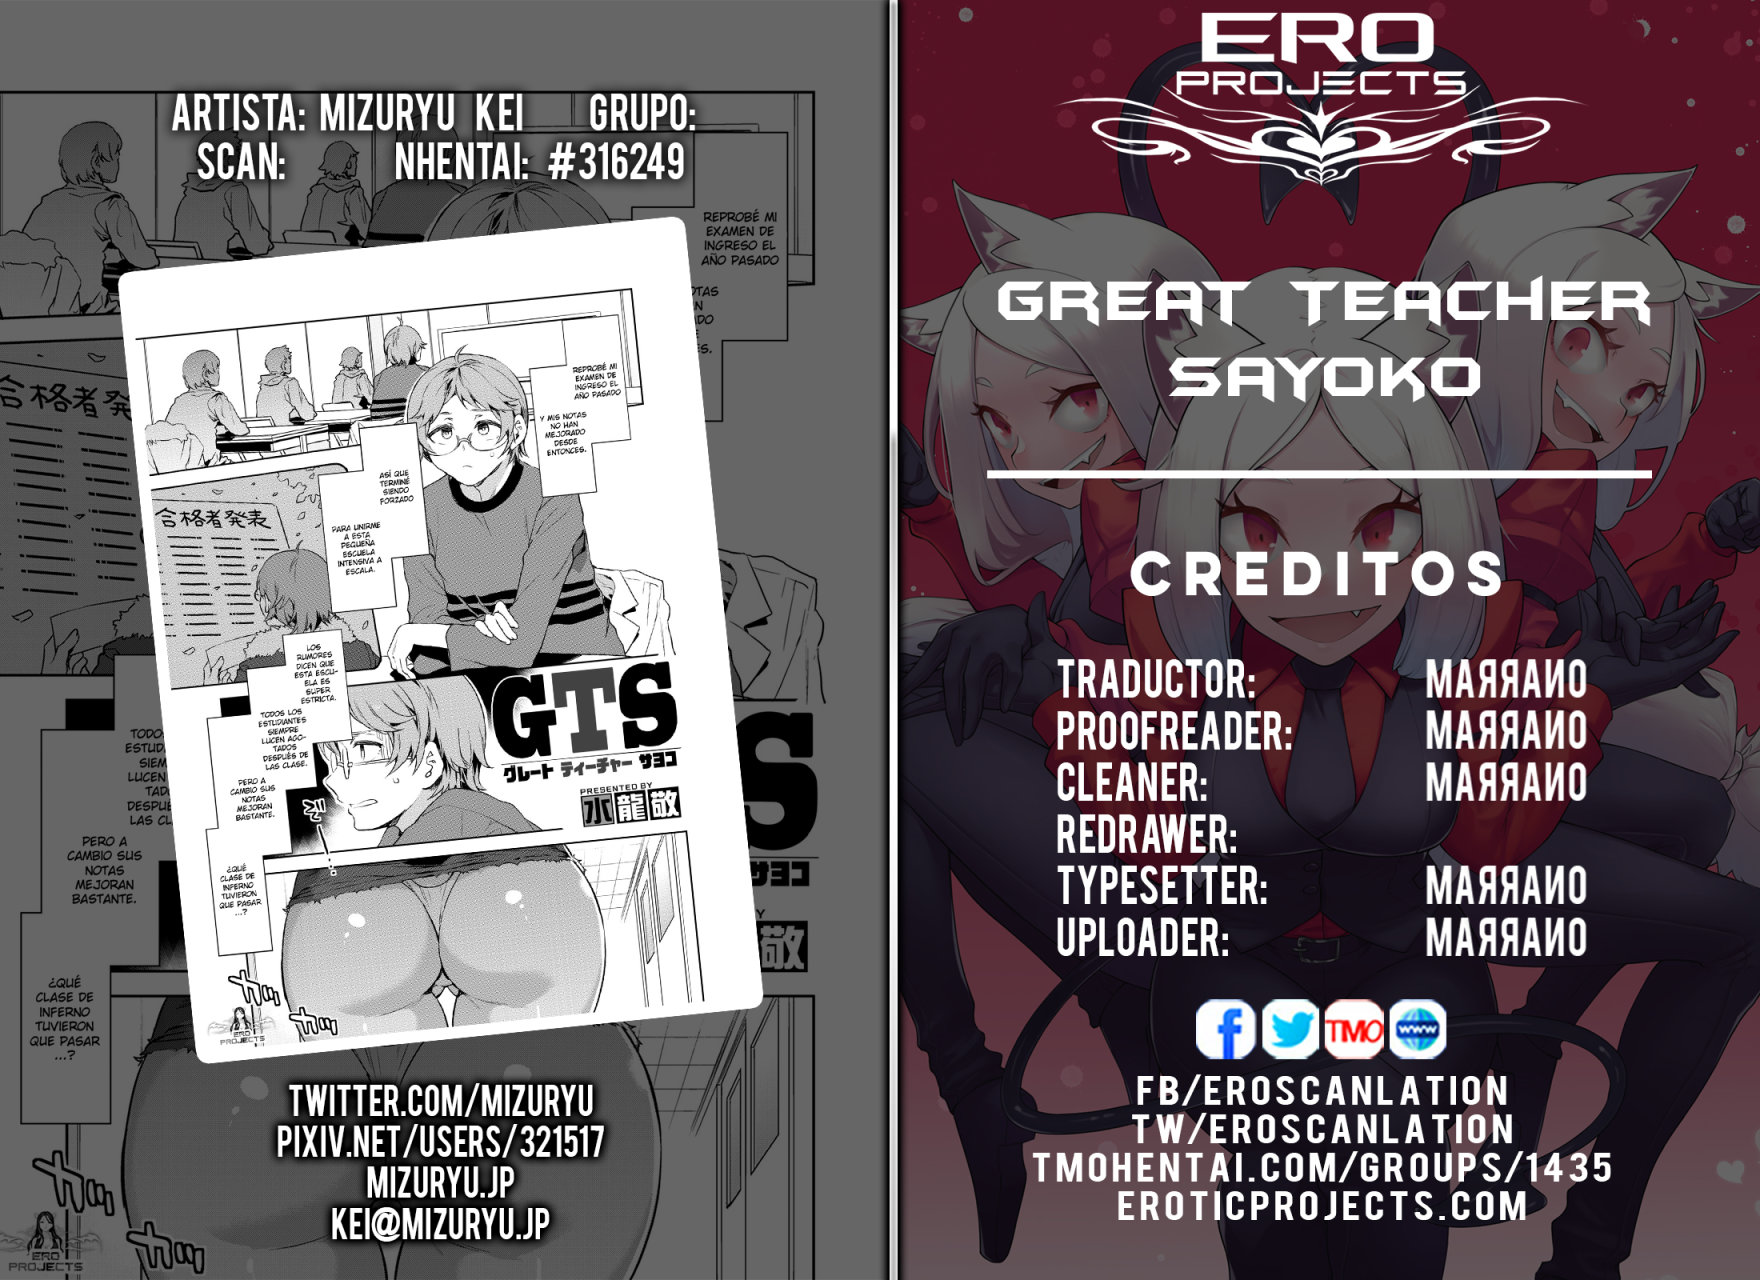 Great Teacher Sayoko (GTS) (Ero Projects) - 0